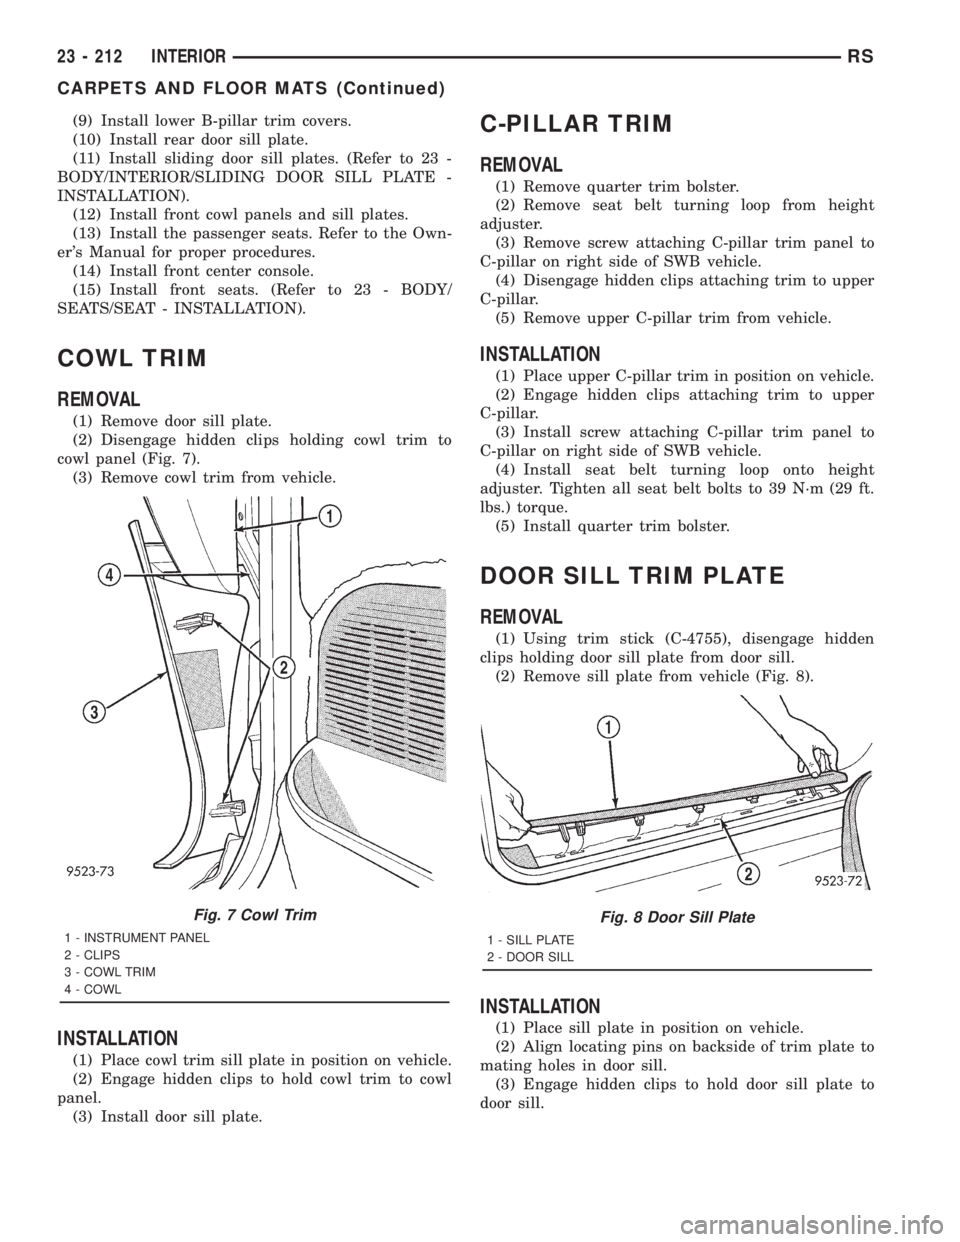 CHRYSLER VOYAGER 2001  Service Manual (9) Install lower B-pillar trim covers.
(10) Install rear door sill plate.
(11) Install sliding door sill plates. (Refer to 23 -
BODY/INTERIOR/SLIDING DOOR SILL PLATE -
INSTALLATION).
(12) Install fro